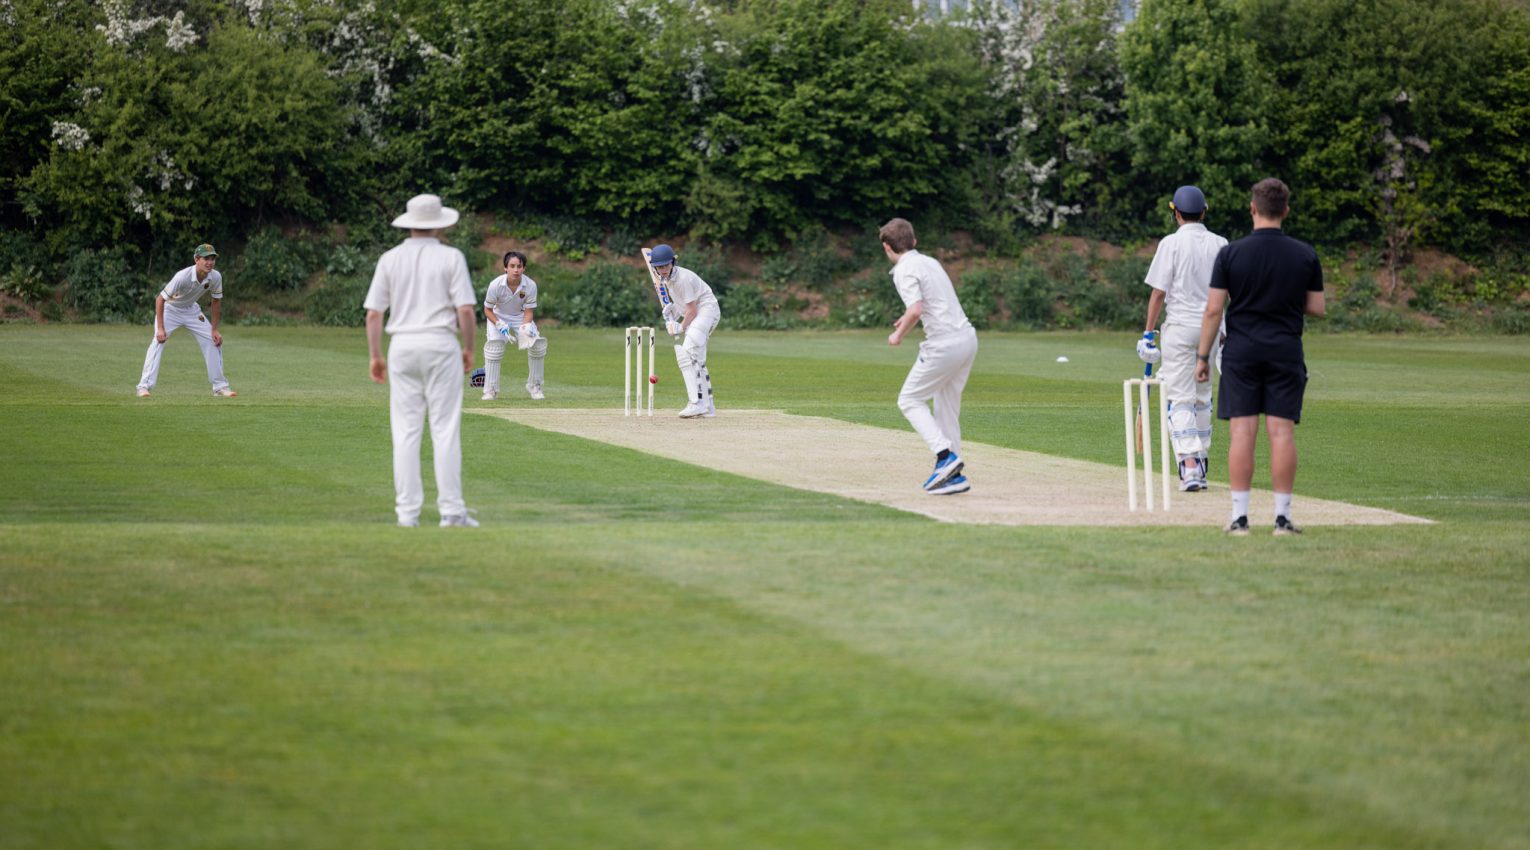 Wetherby Senior pupils enjoy a cricket match at Ealing Trailfinders